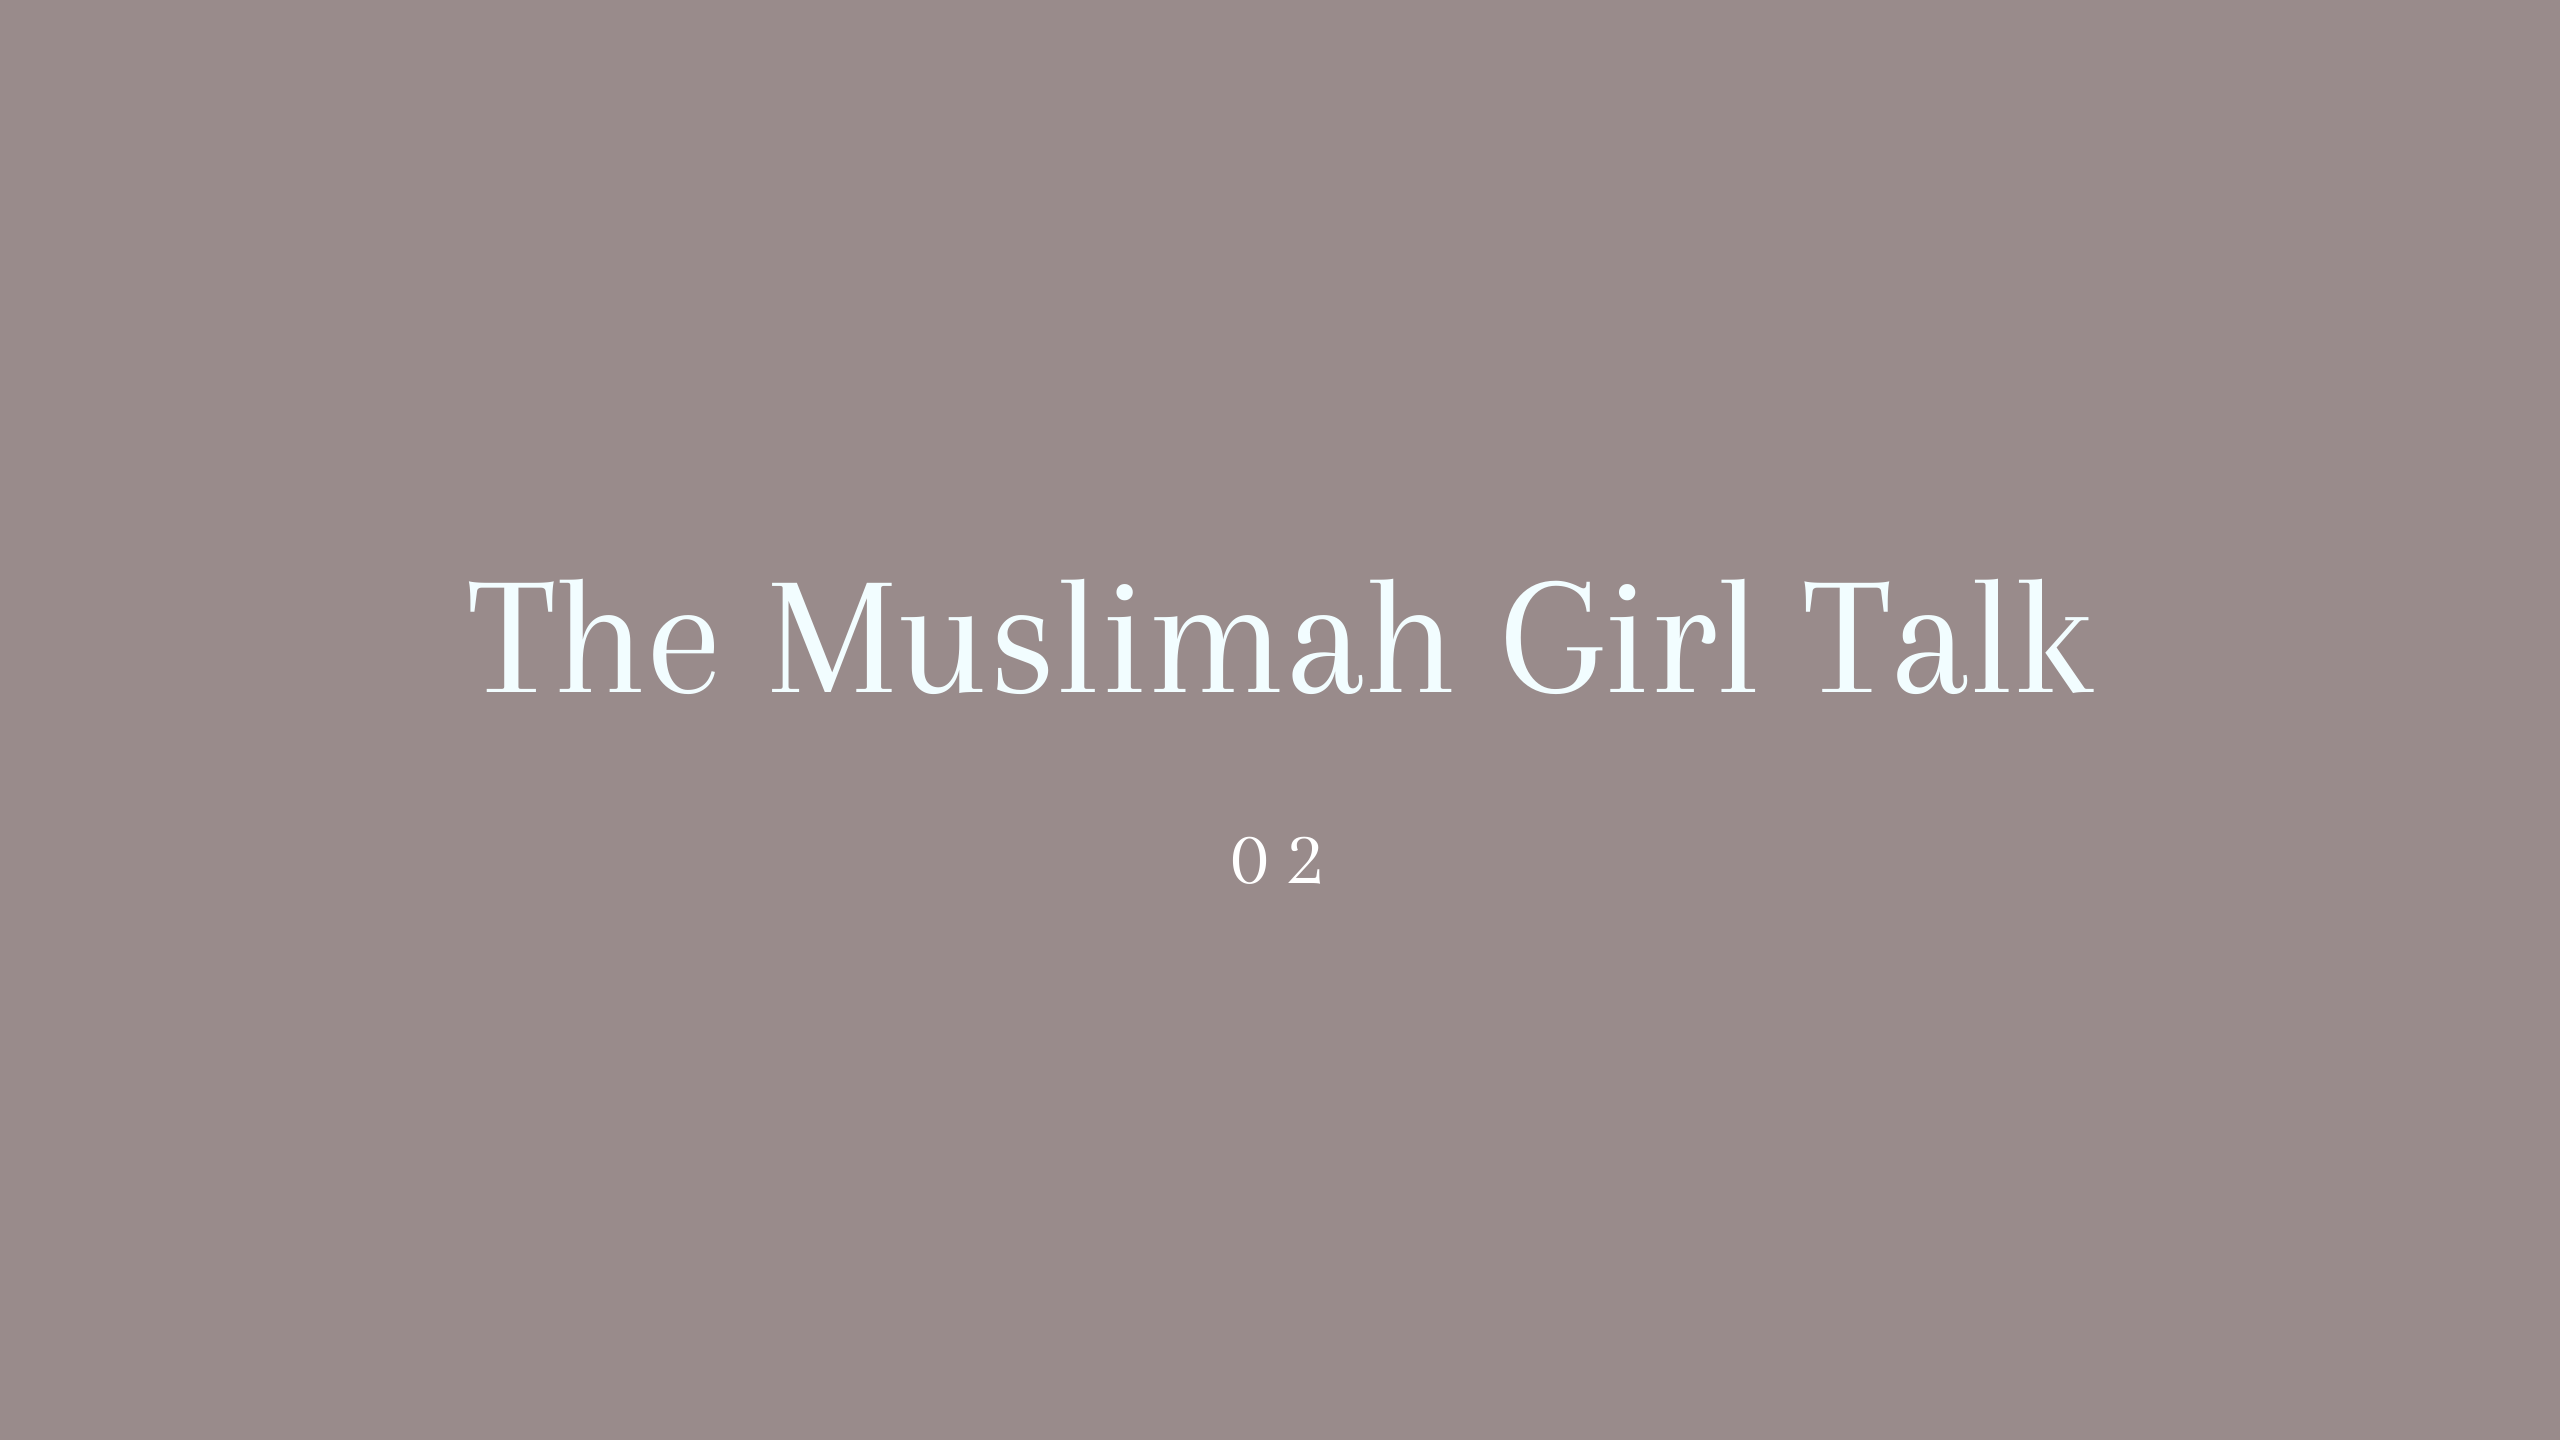 M3-03: MUSLIM MALE MENTORSHIP